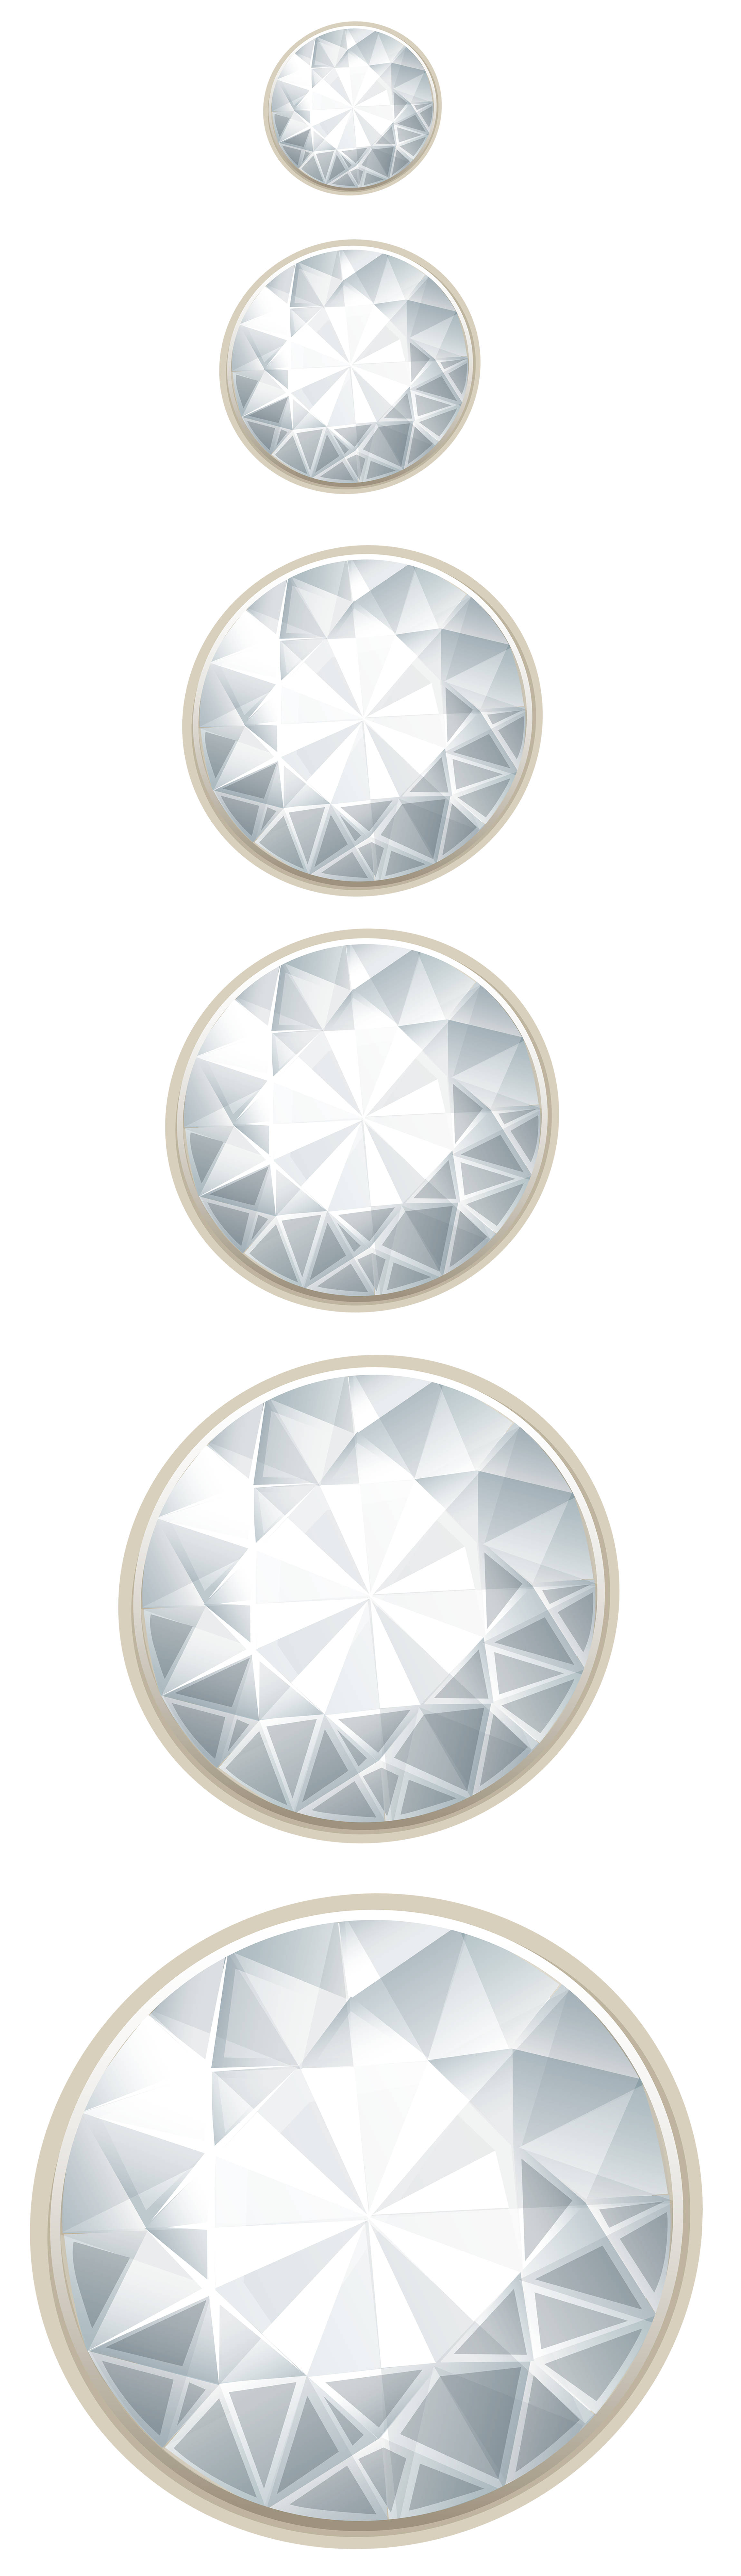 Decor Diamond Banner Transparent PNG Image High Quality Clipart